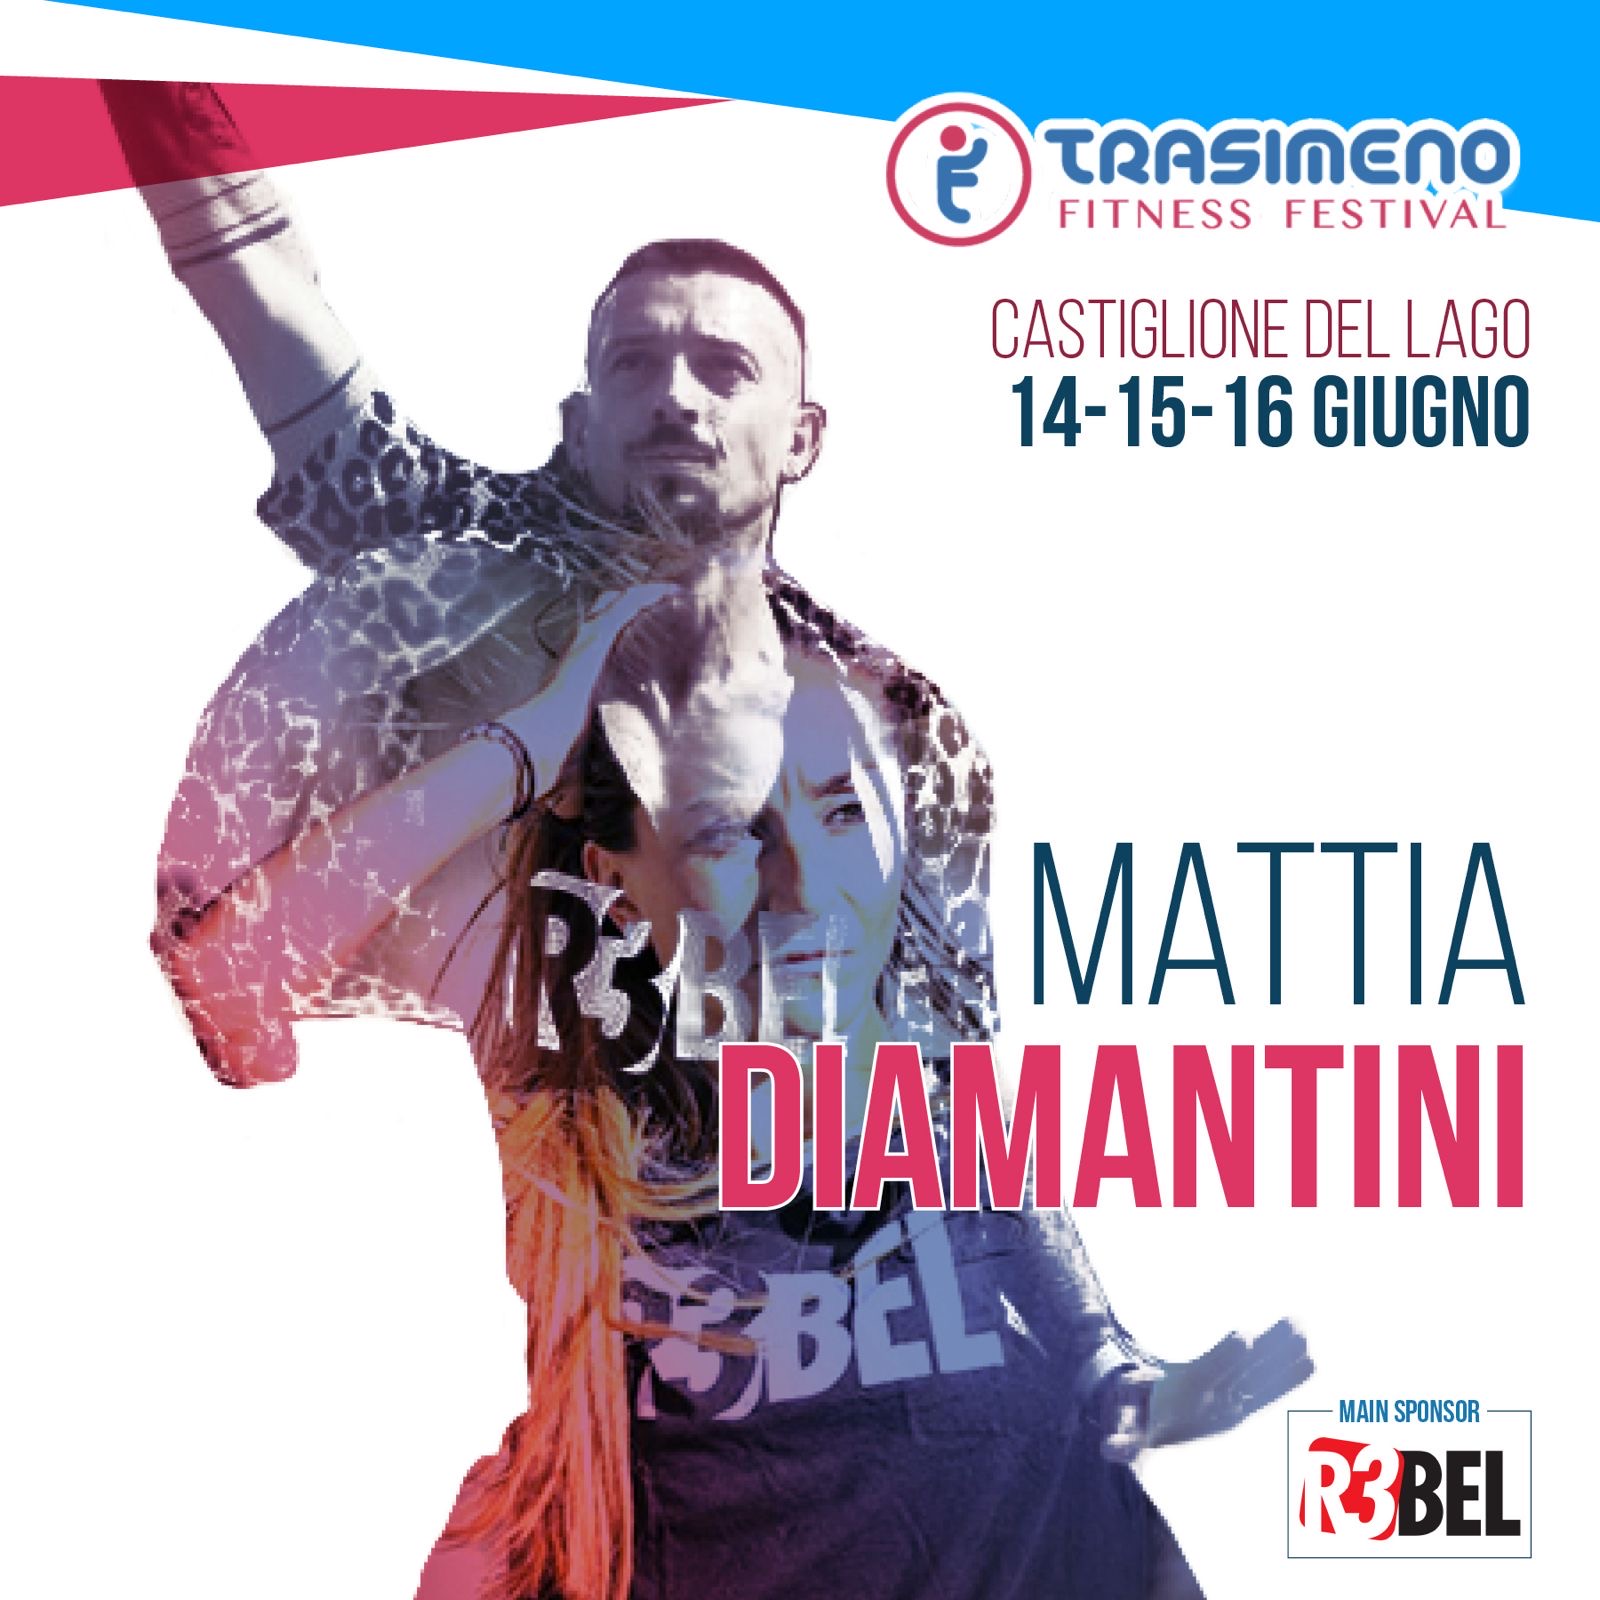 Mattia Diamantini - Trasimeno Fitness Festival